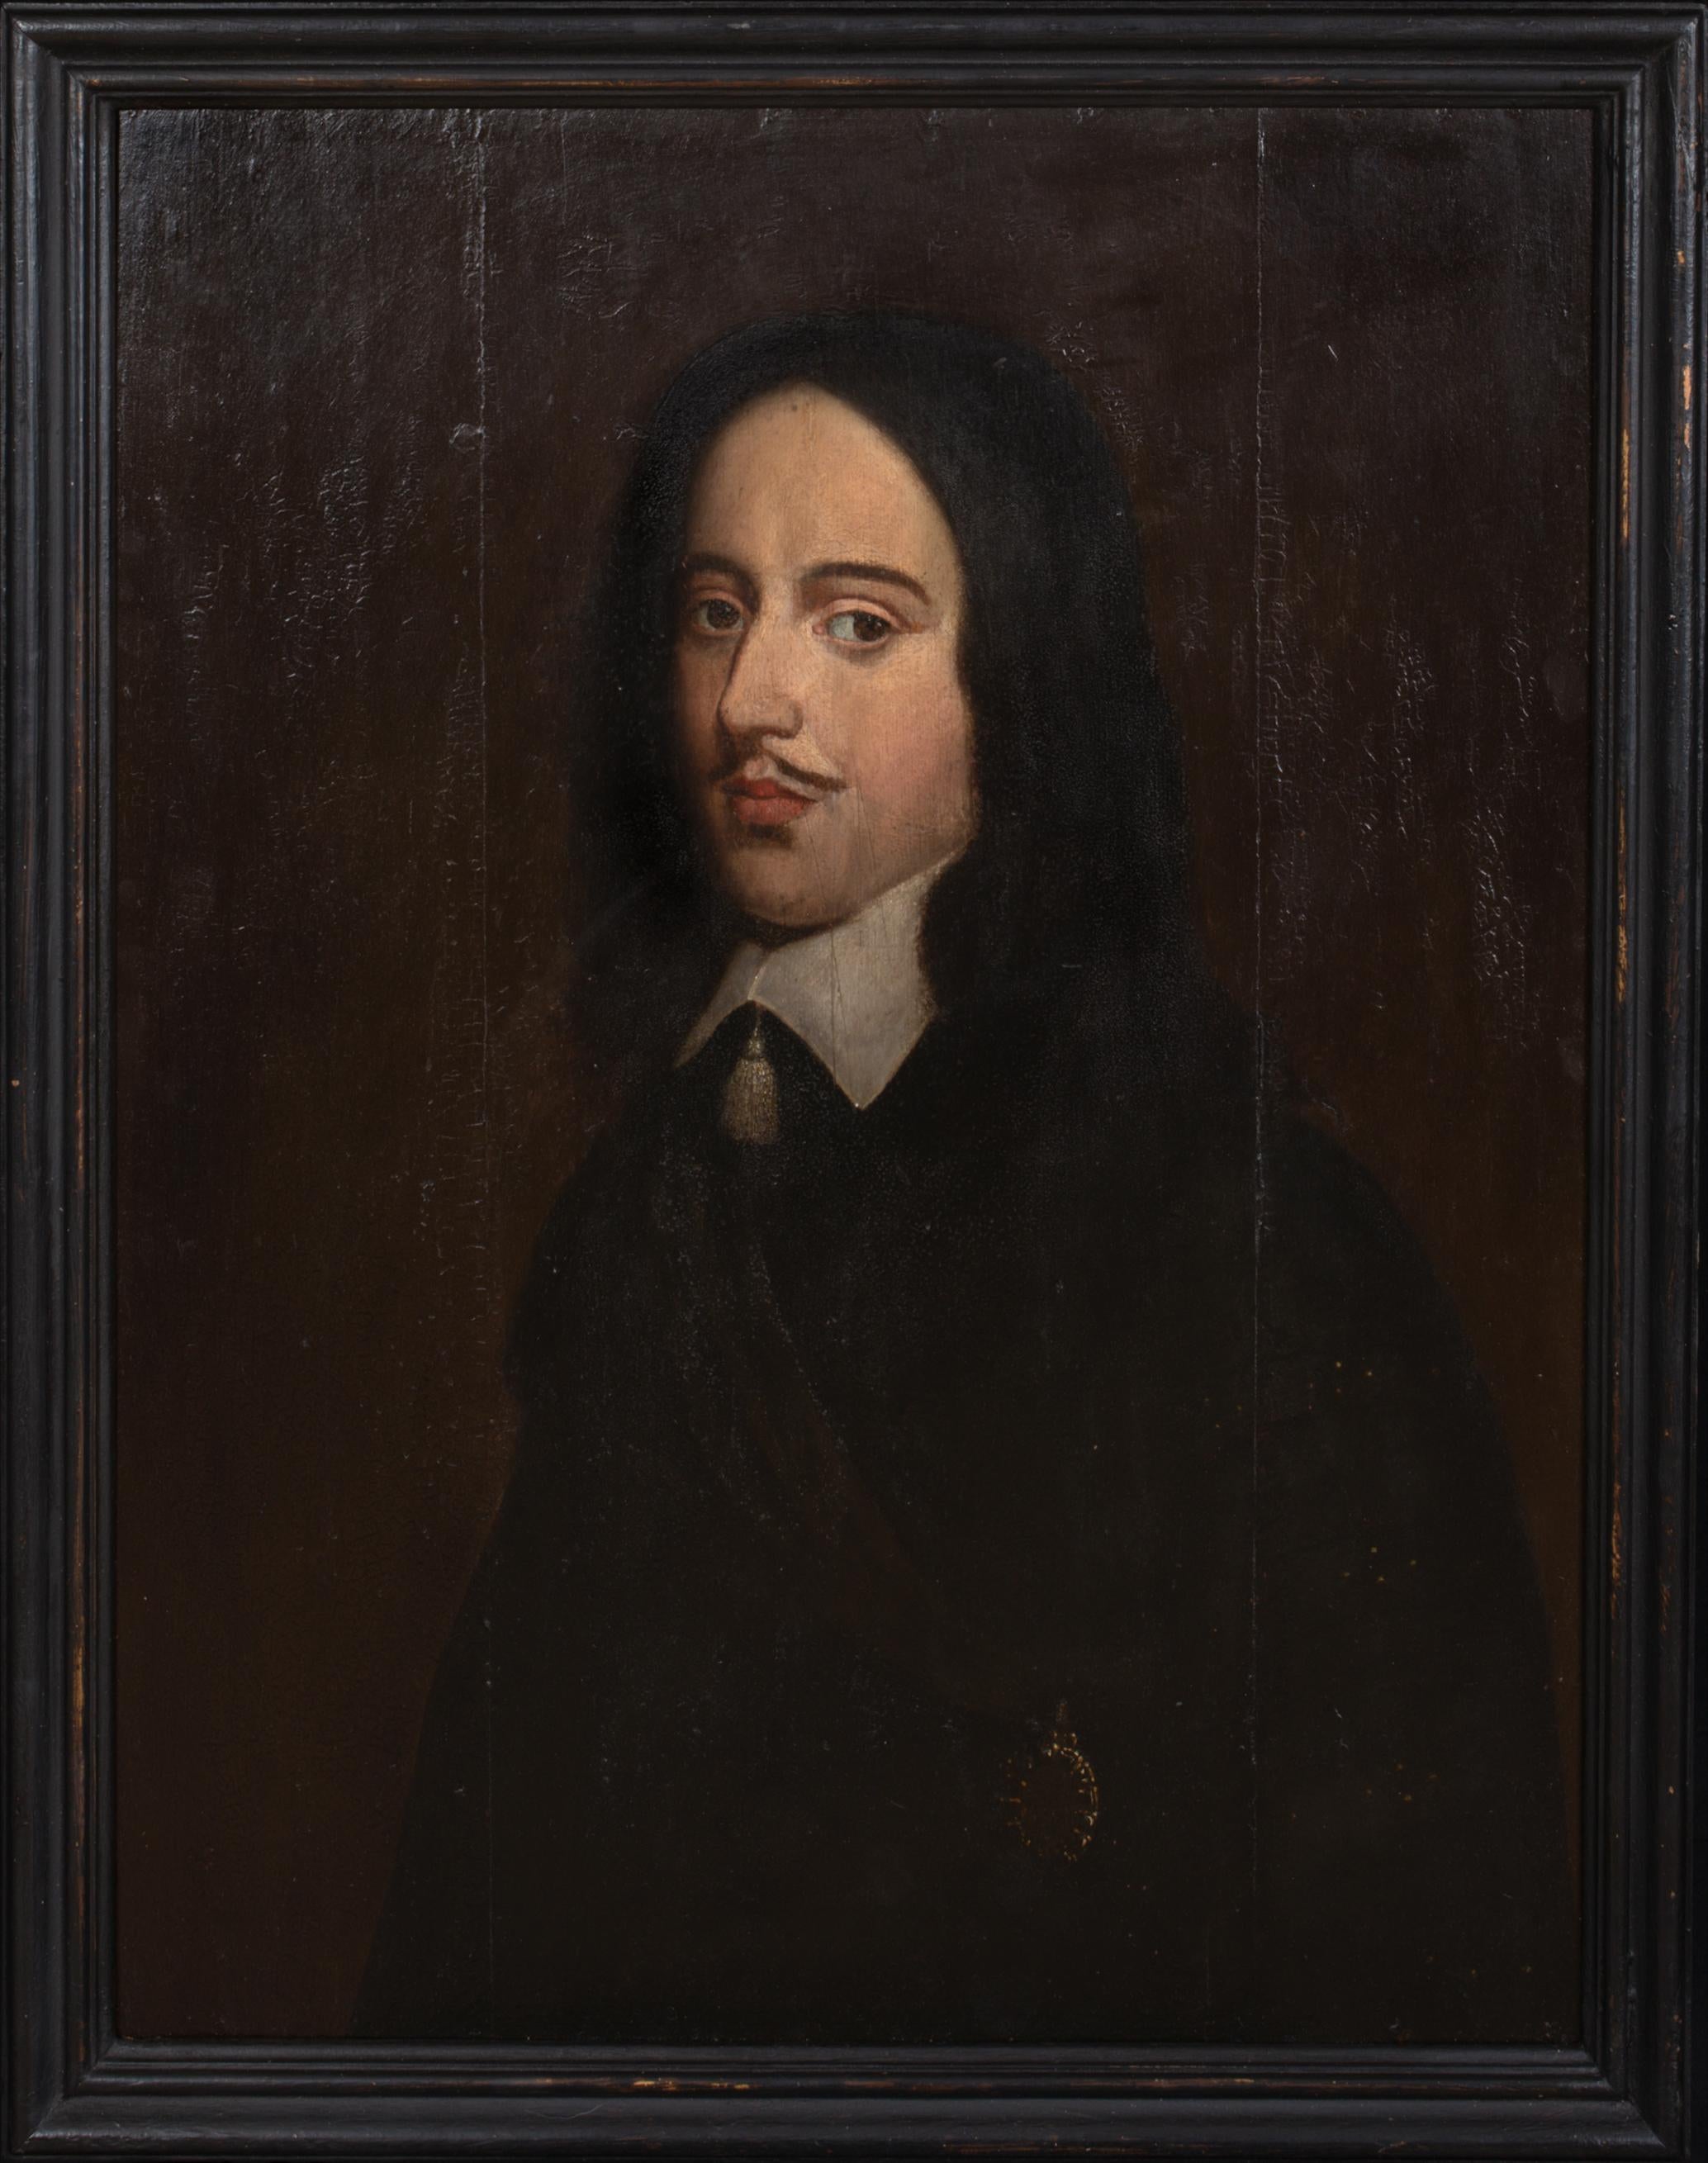 Unknown Portrait Painting - Portrait Of William II Prince Of Orange, circa 1650  Dutch School  